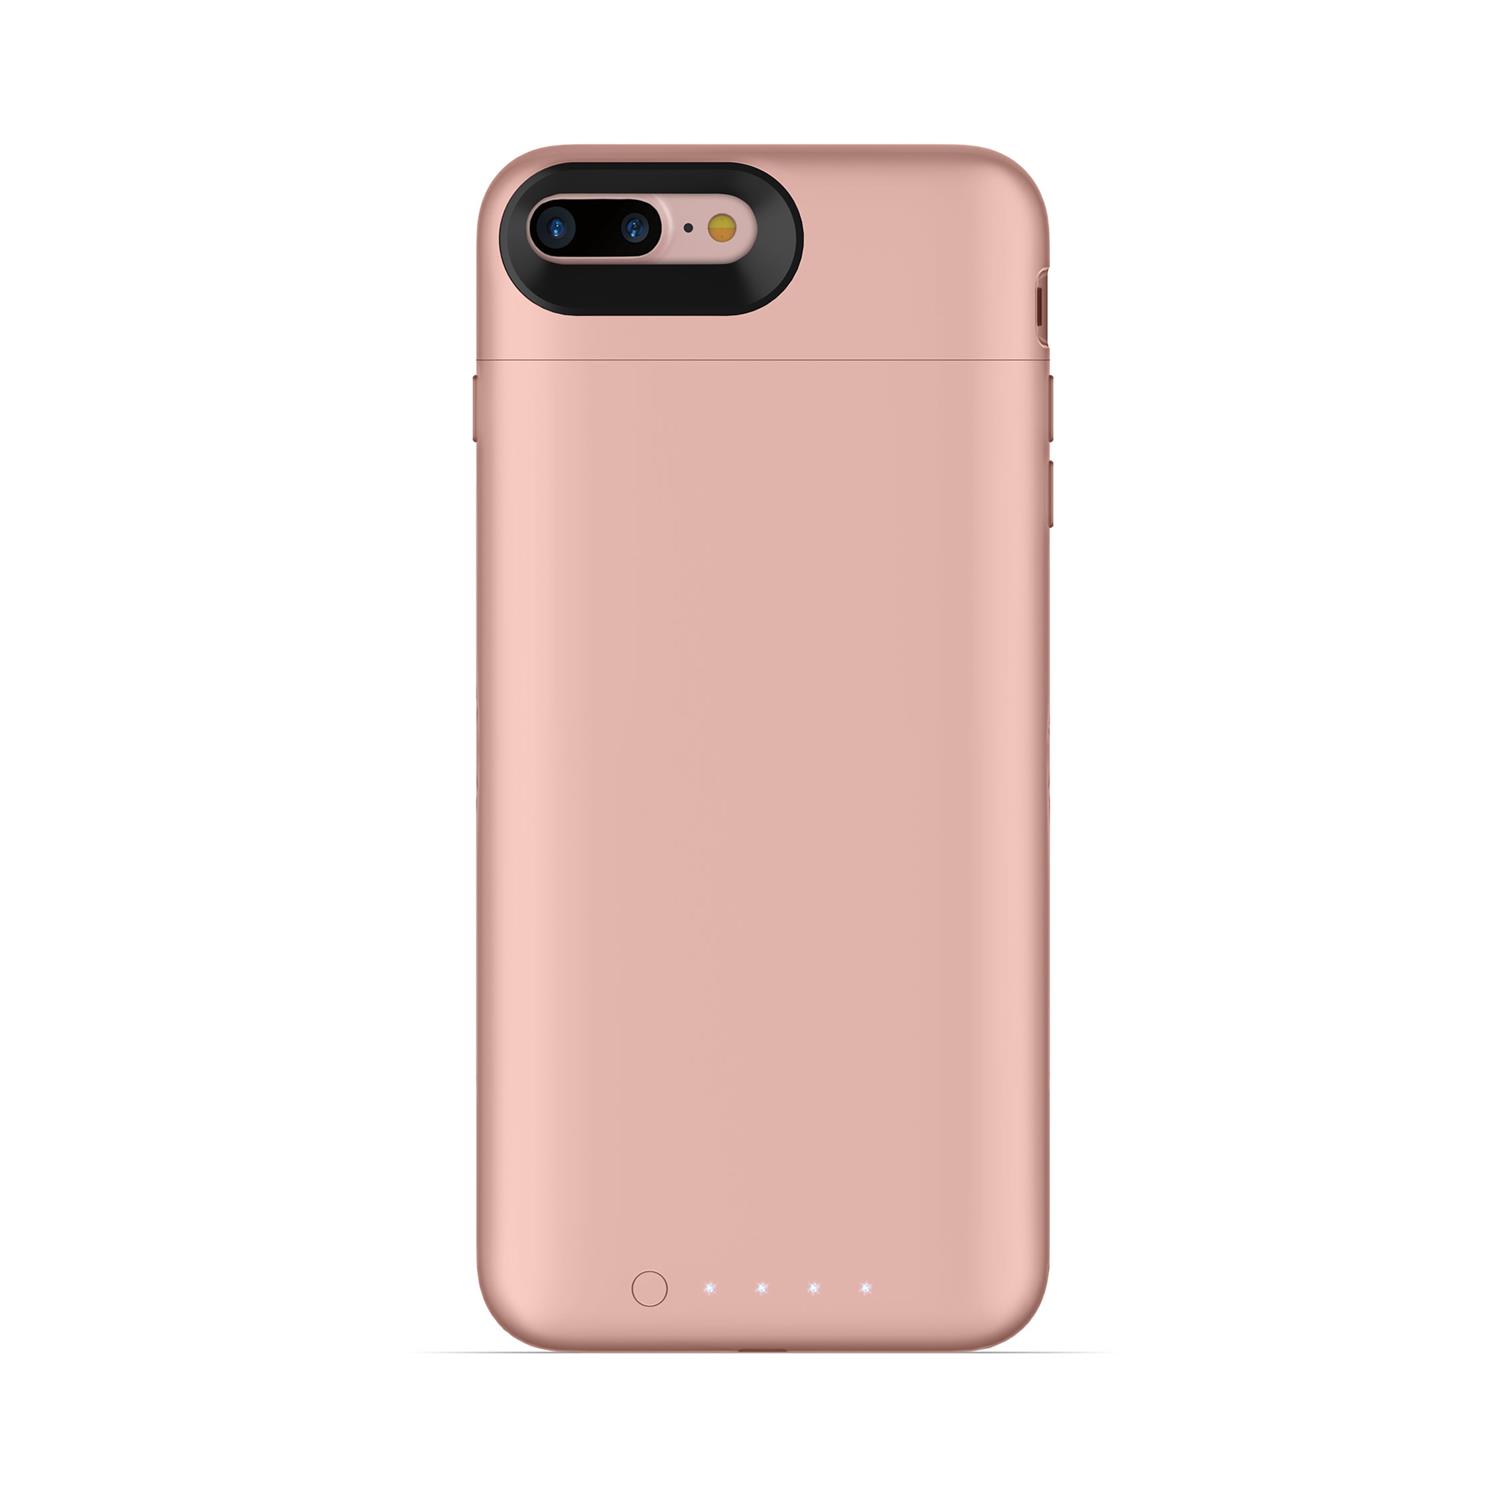 Mophie Juice Pack Air 2525 mAh für iPhone 7/8 Plus - rose gold colored